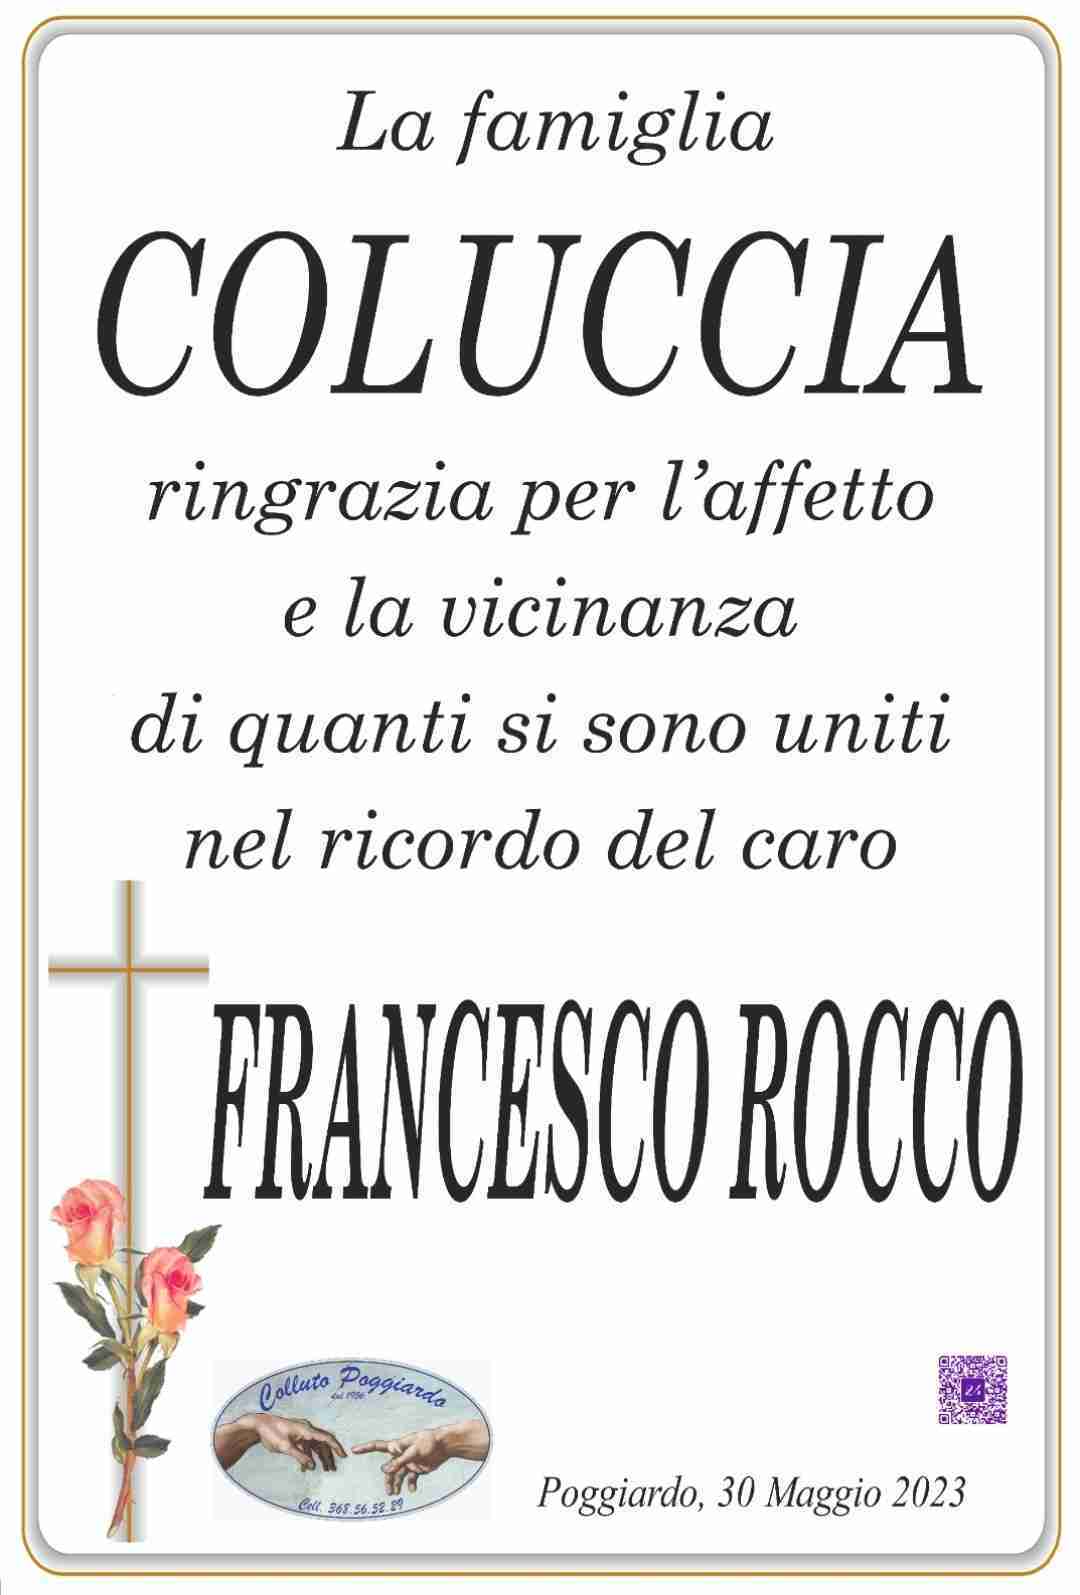 Francesco Rocco Coluccia